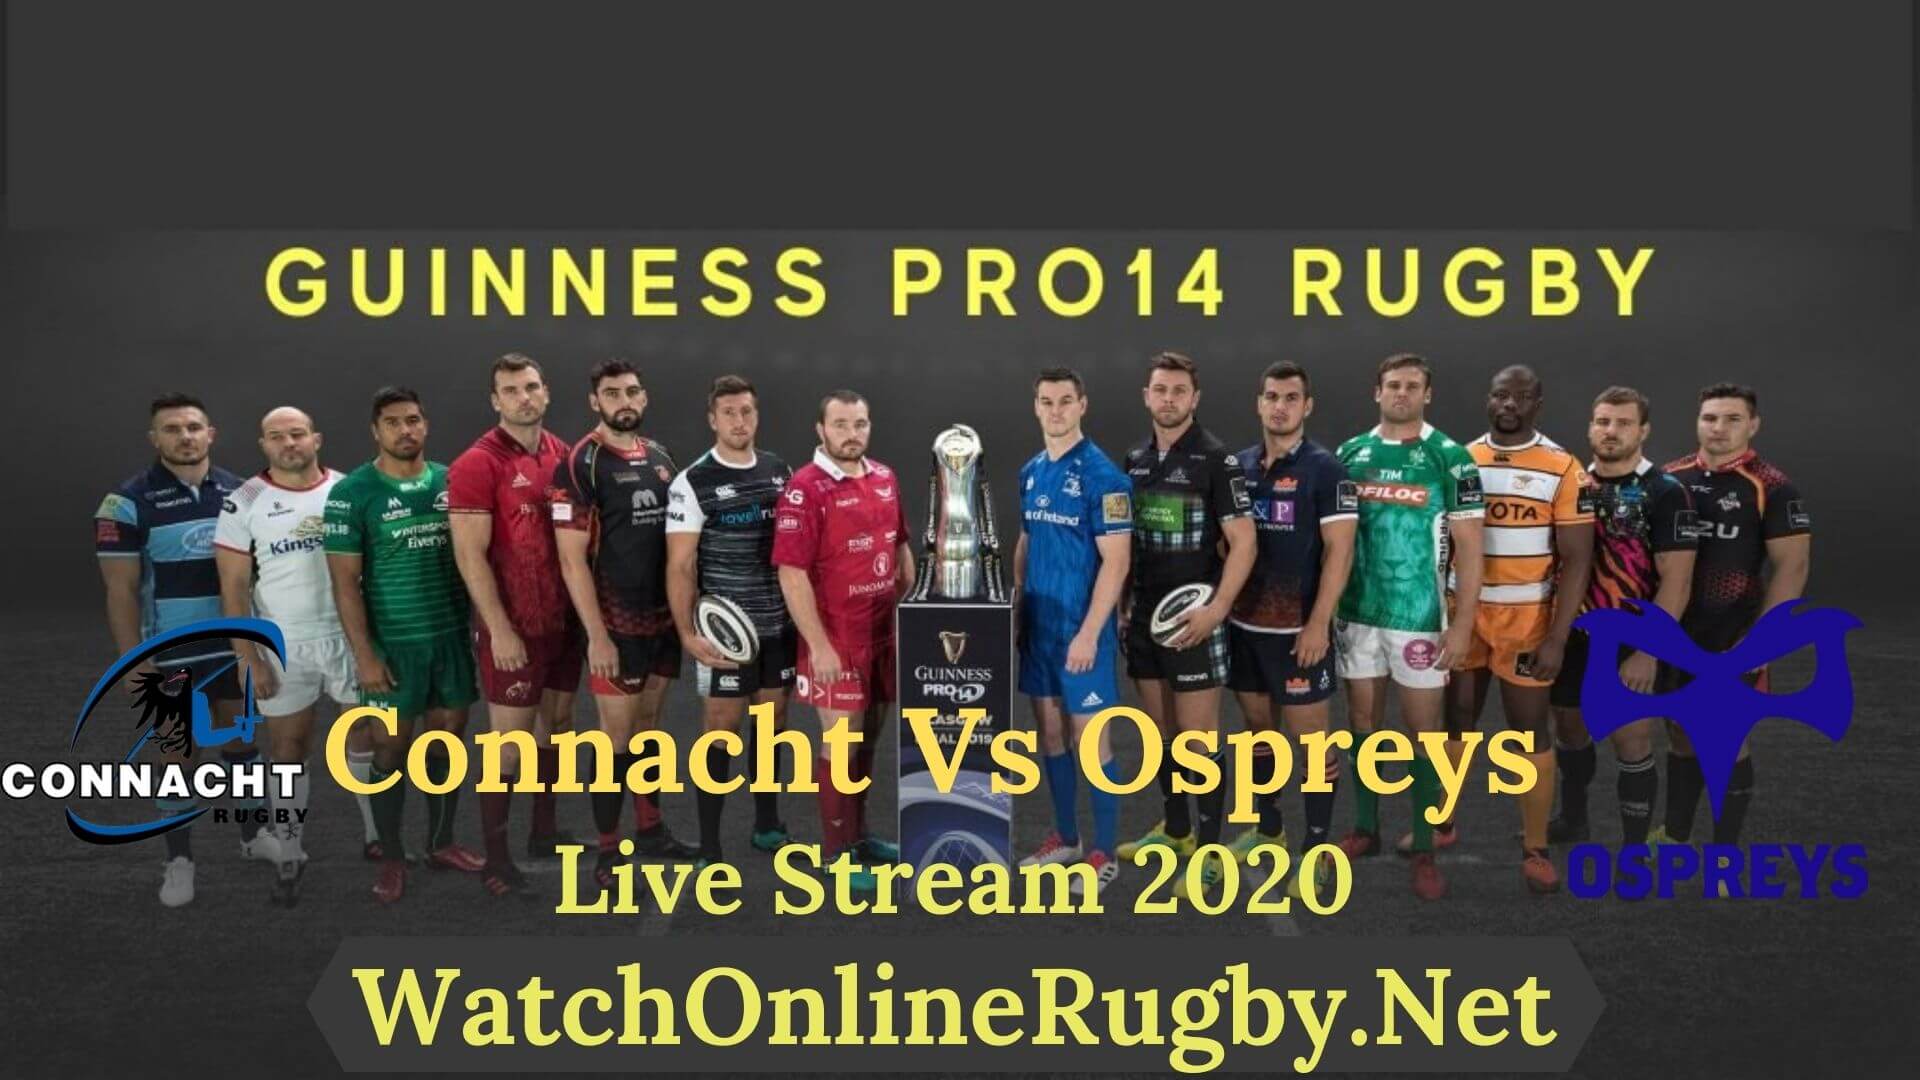 Connacht Vs Ospreys Guinness PRO14 2020